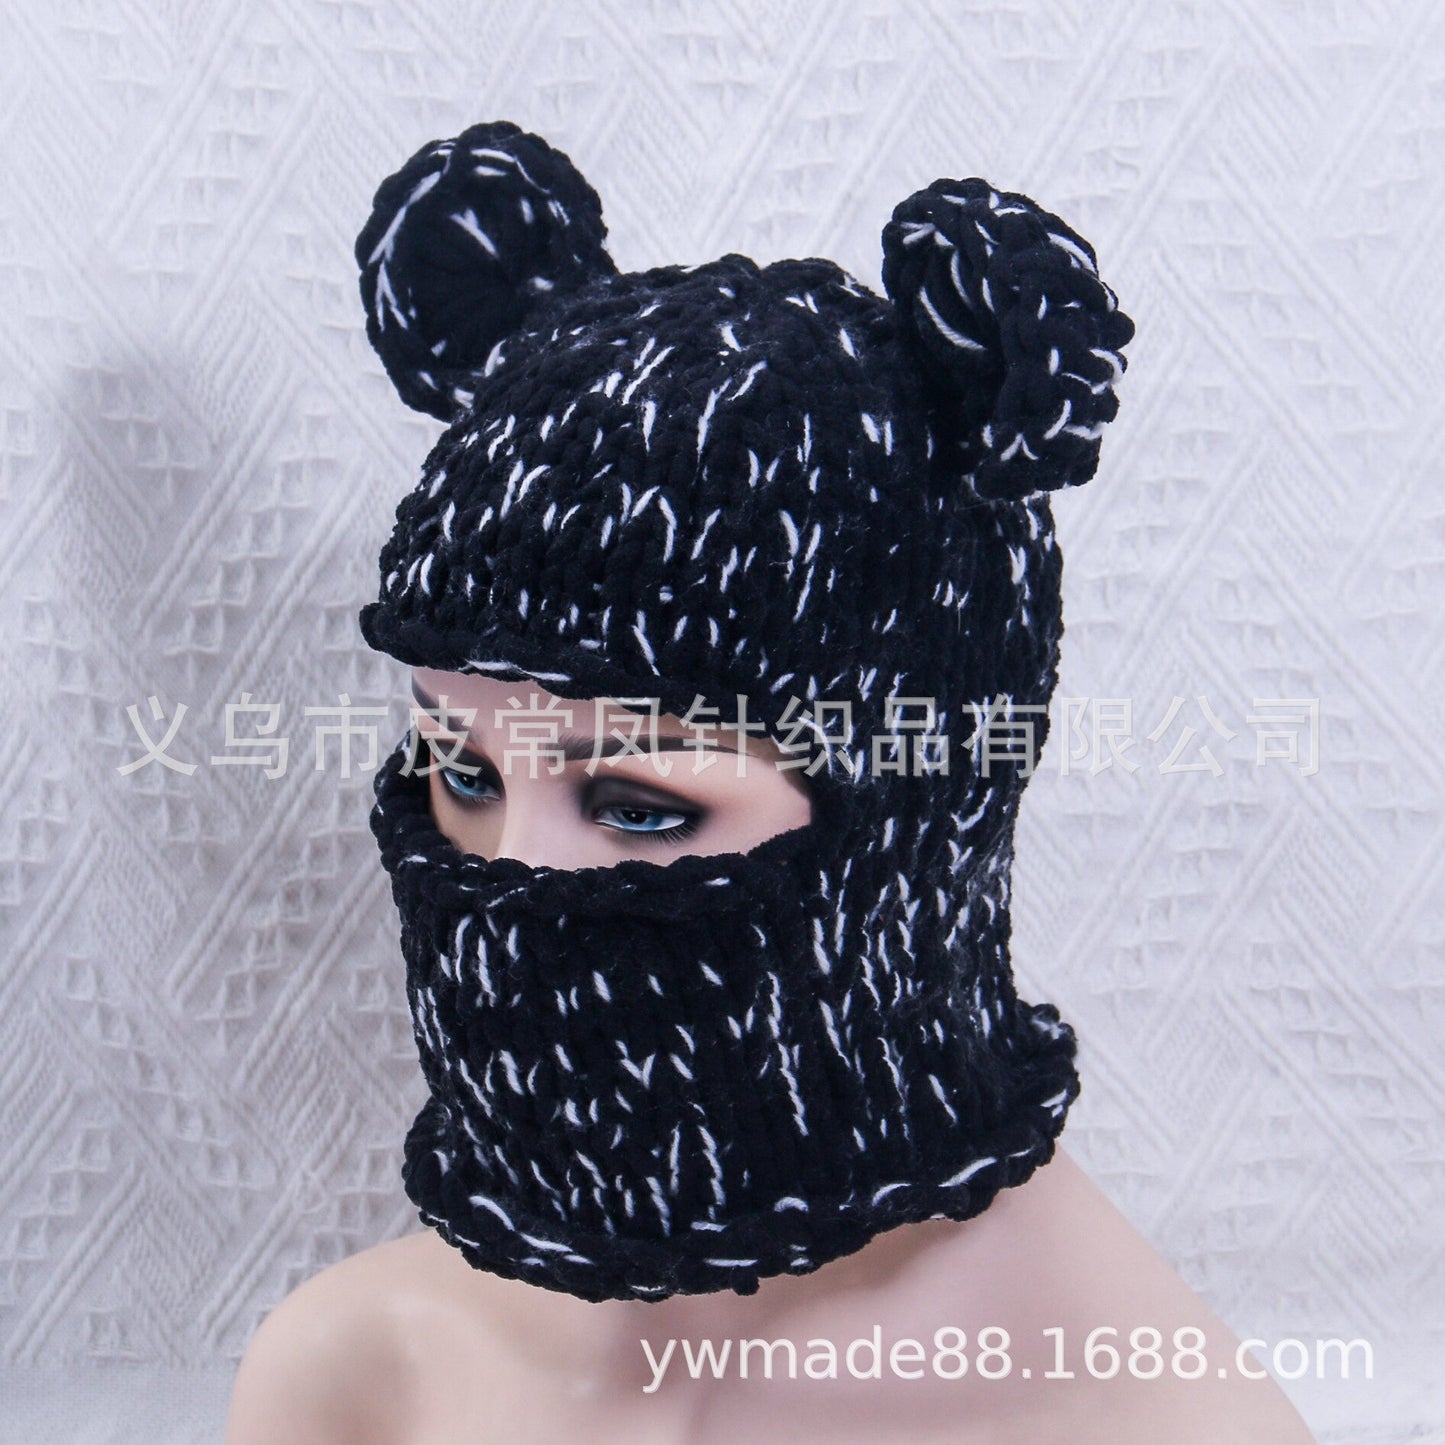 Winter Balaclava Hats Halloween Party Bear Ears Creative Knit Hat Man Warm Outdoor Full Face Mask Ski Mask